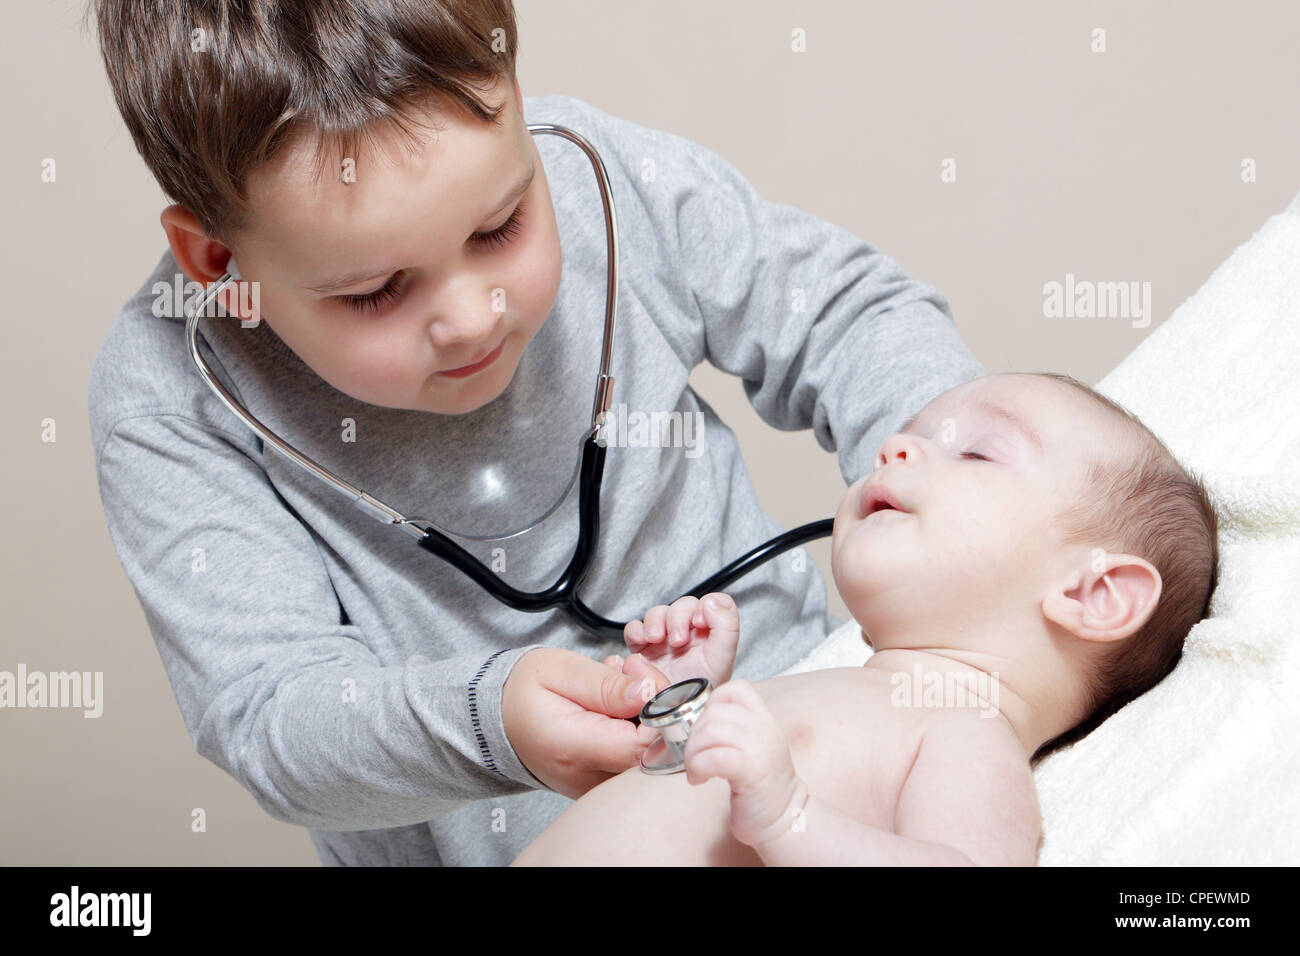 Stethoskop Herzschlag des Babys hören Stockfotografie - Alamy